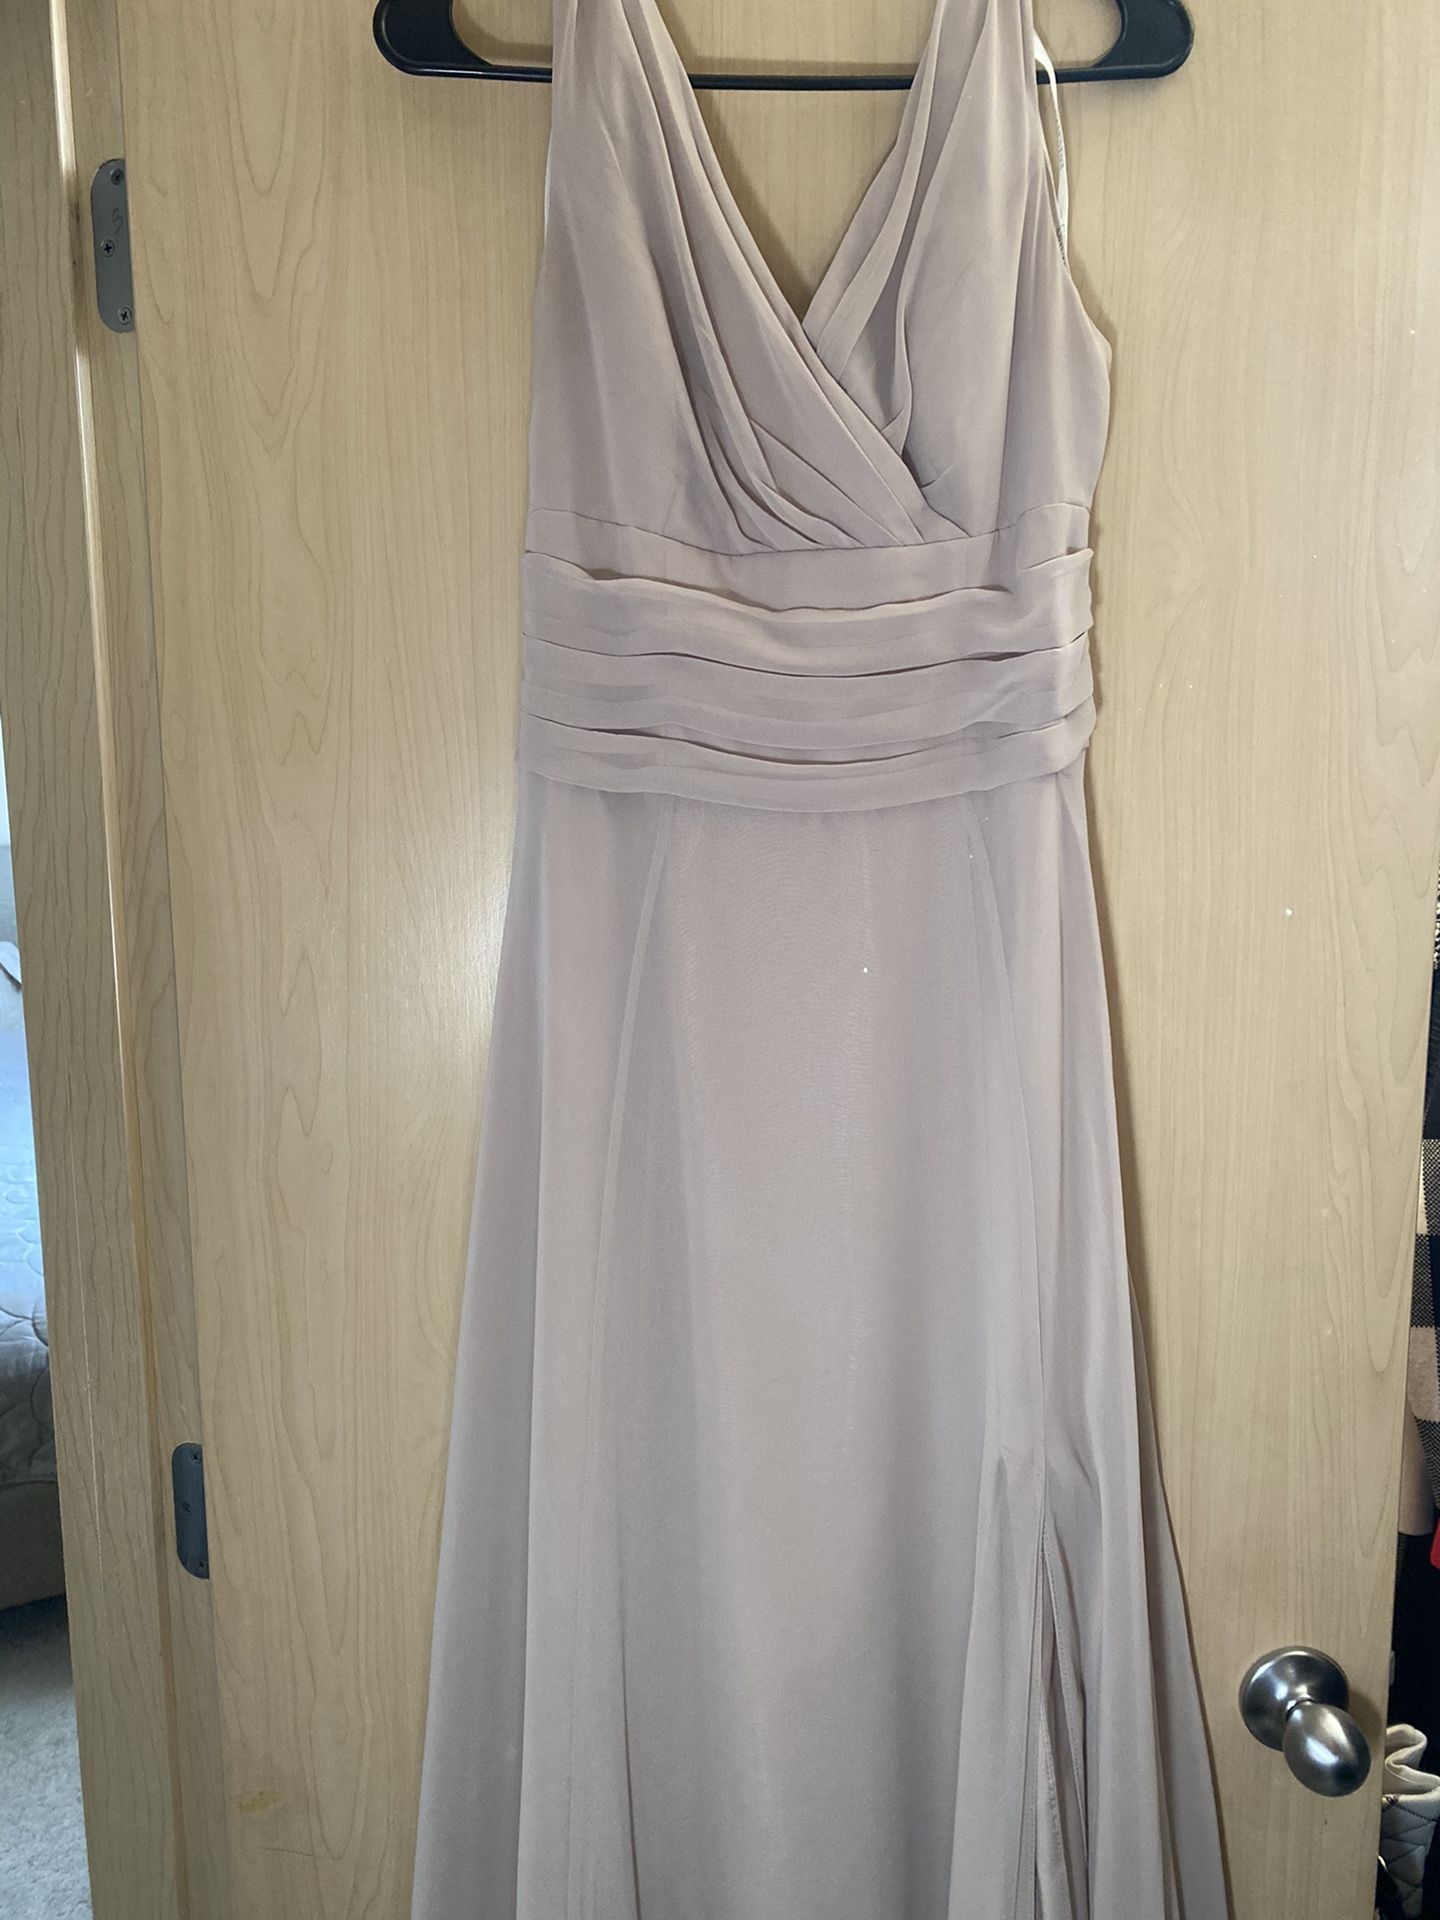 David’s Bridal Dress (size 4)